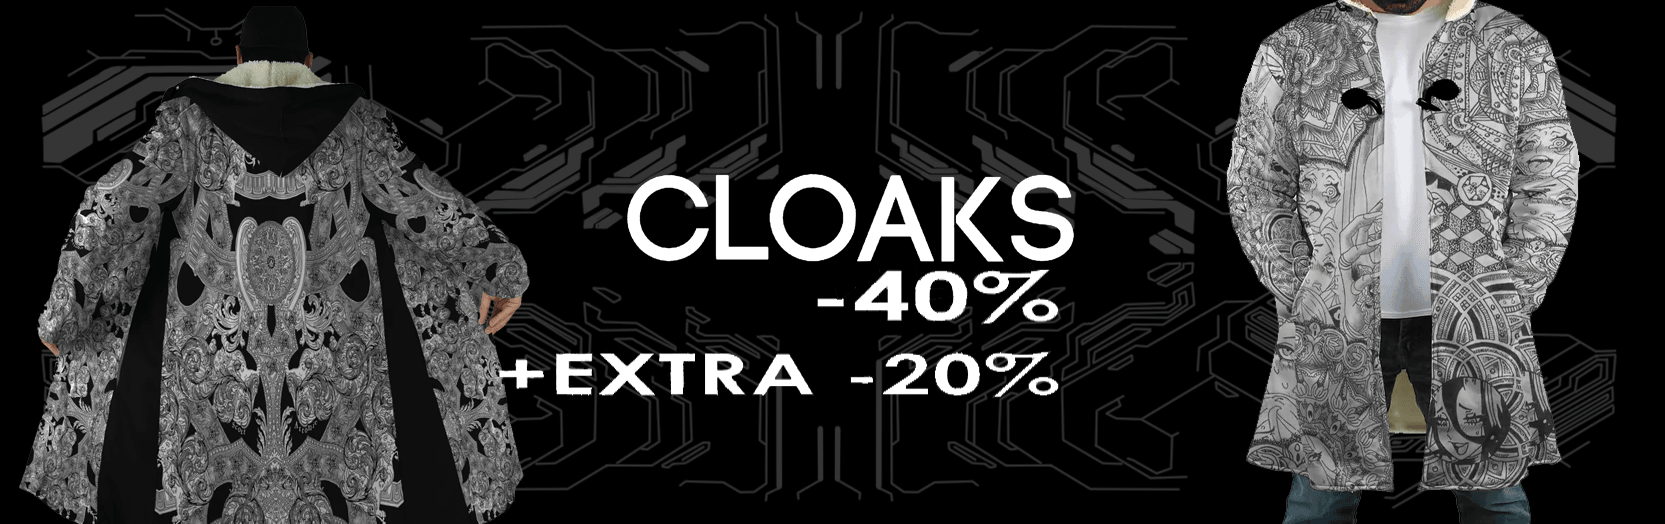 Cloaks - Scott Atomic™ merchandise